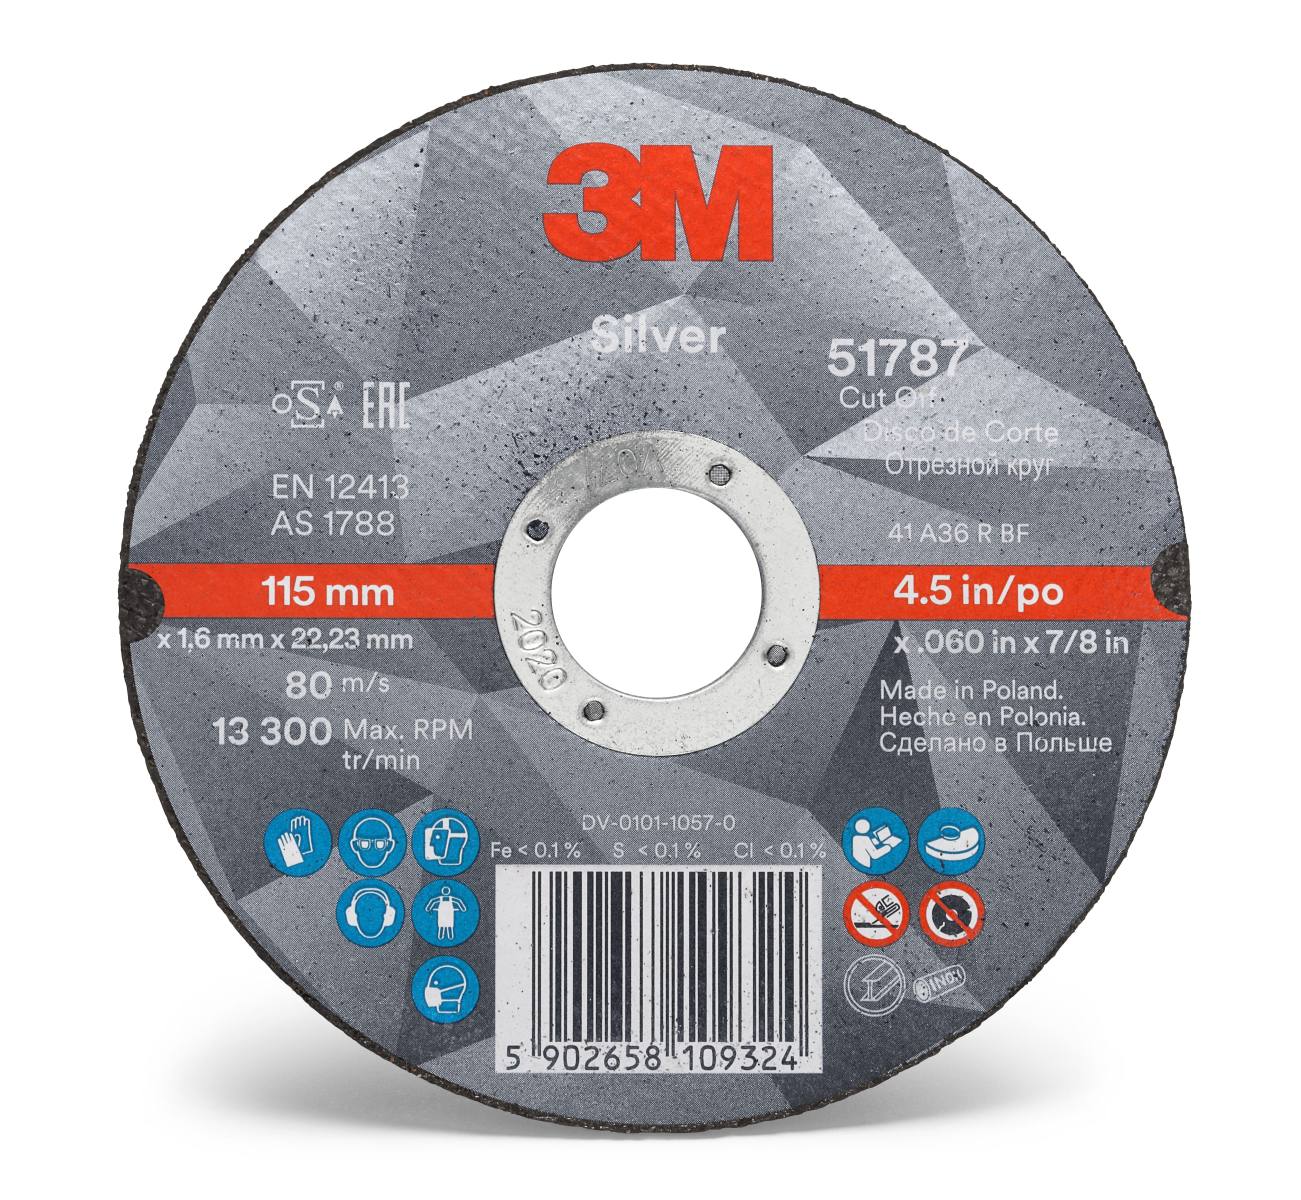 Disco de corte 3M Silver Cut-Off, 75 mm, 1,0 mm, 10 mm, T41, 51767